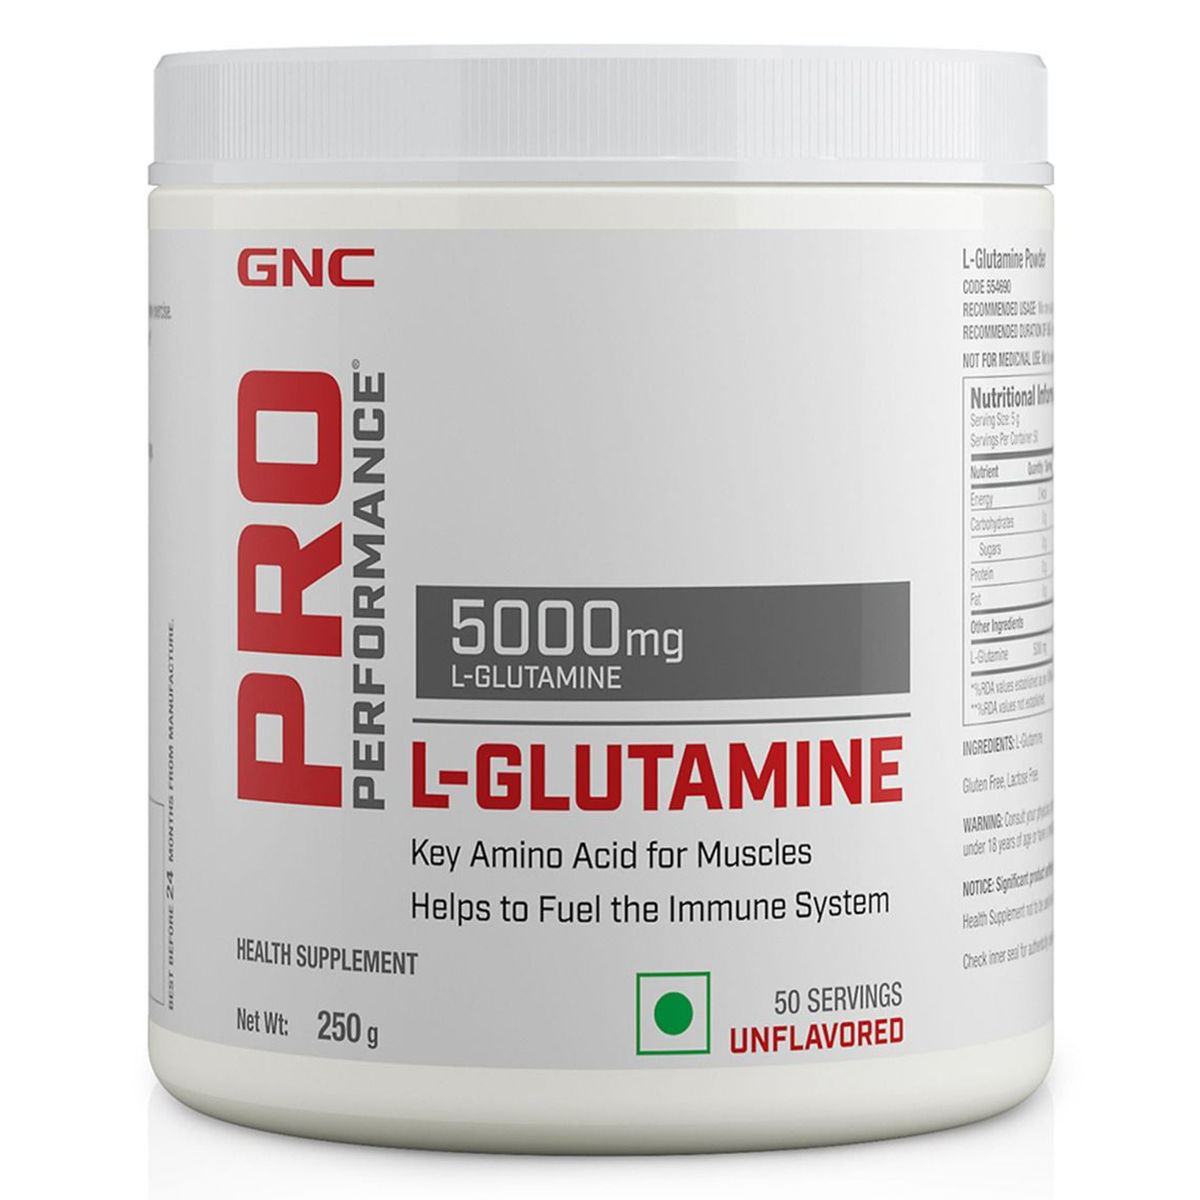 Buy GNC PRO Performance L-Glutamine 5000 mg Unflavored Powder, 250 gm Online